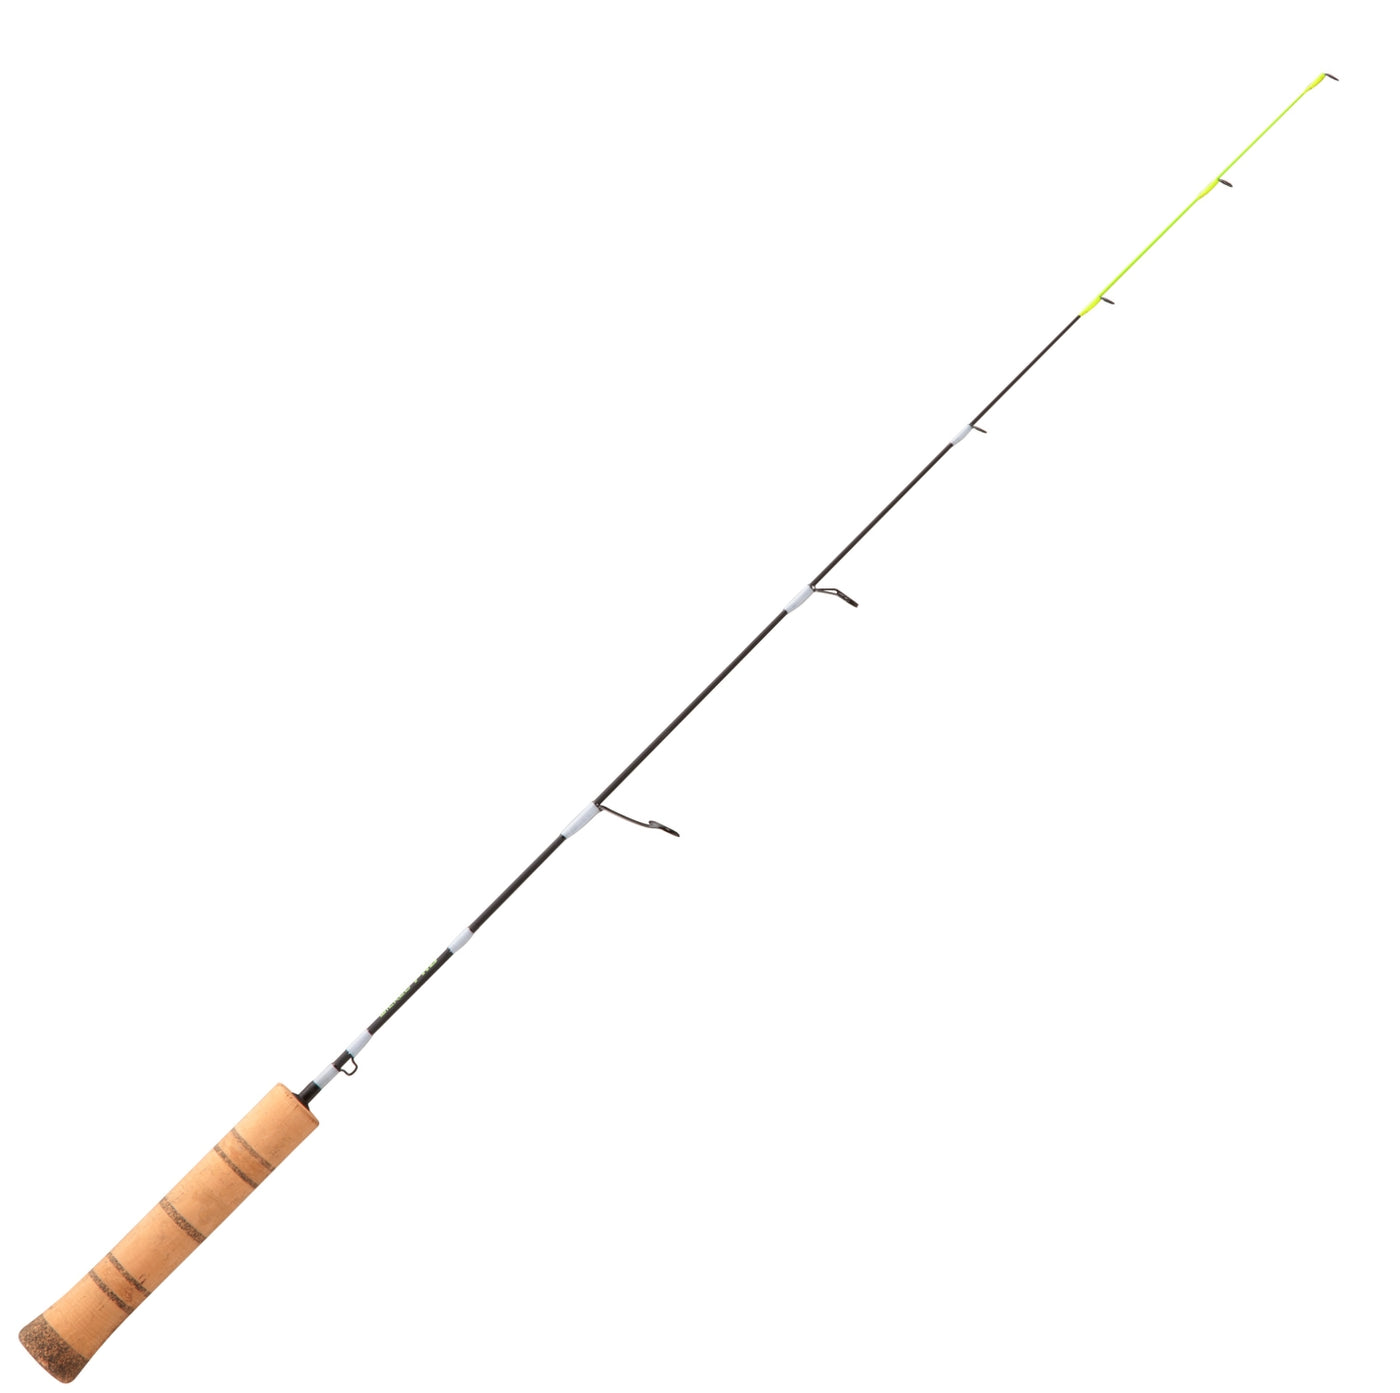 Taliritv 13 FISHING Wicked Ice Rod